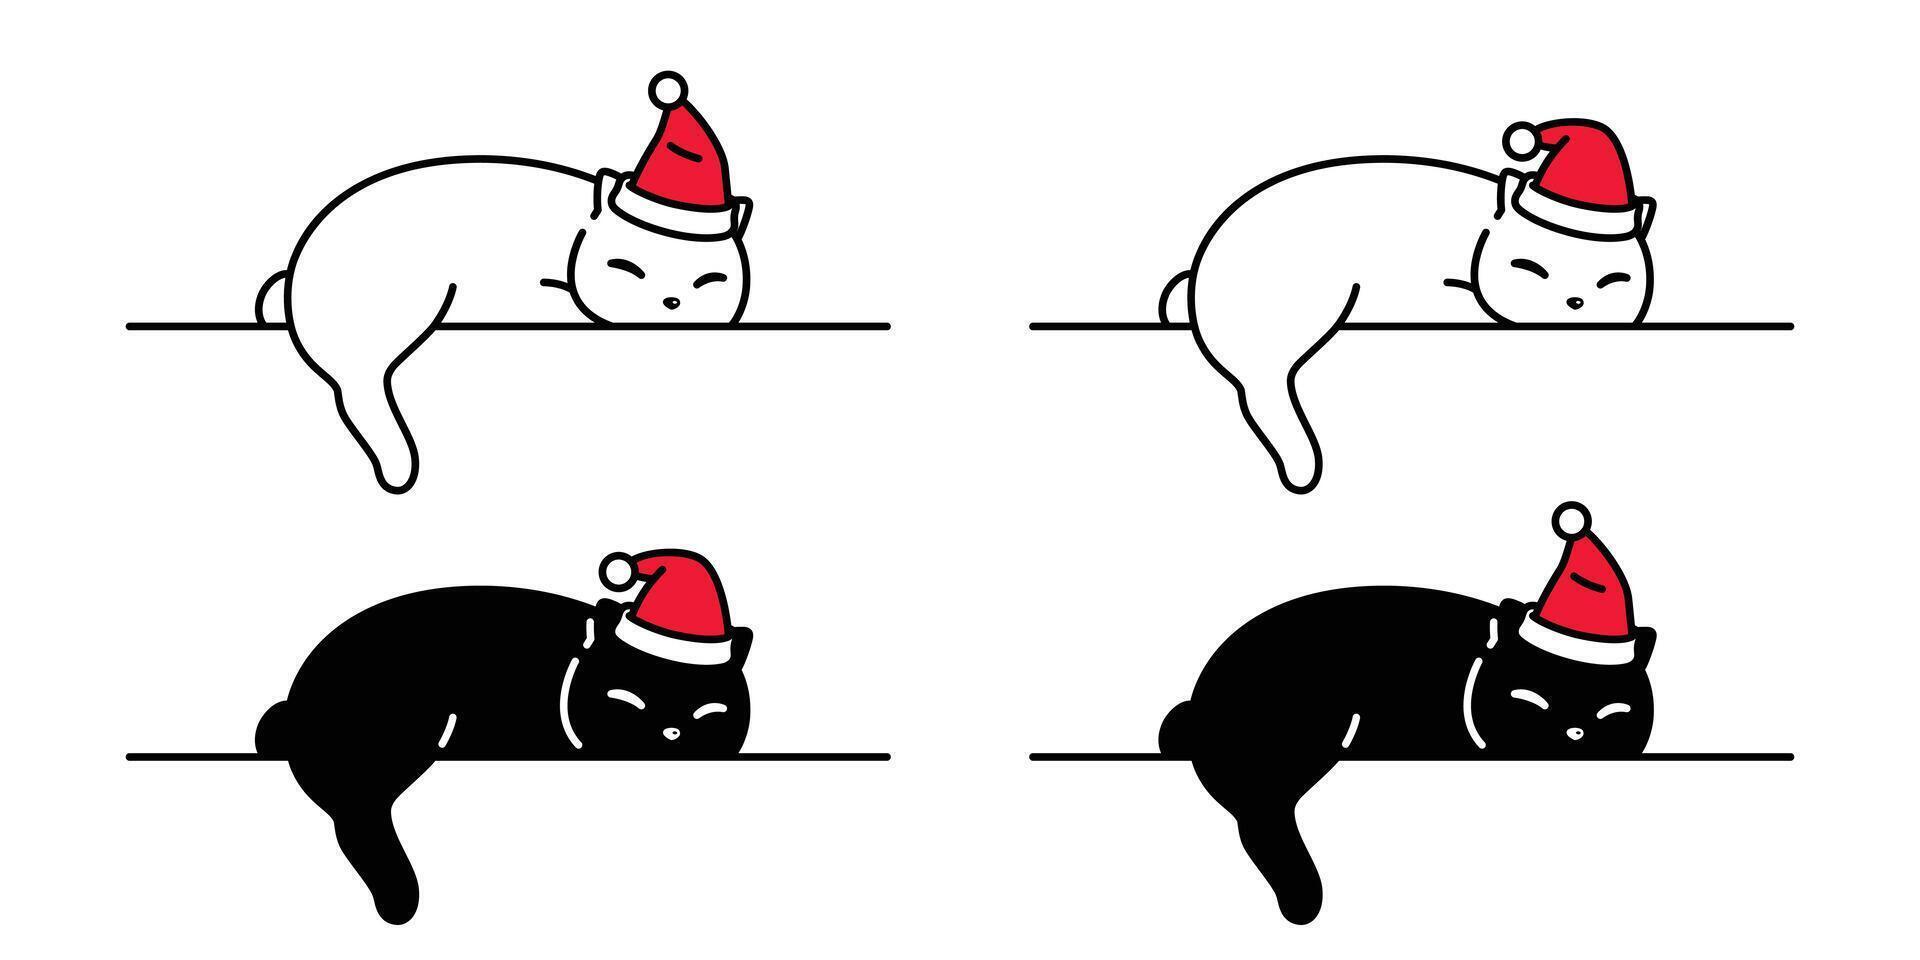 cat vector Christmas Santa Claus hat calico kitten sleeping icon logo symbol character cartoon illustration design